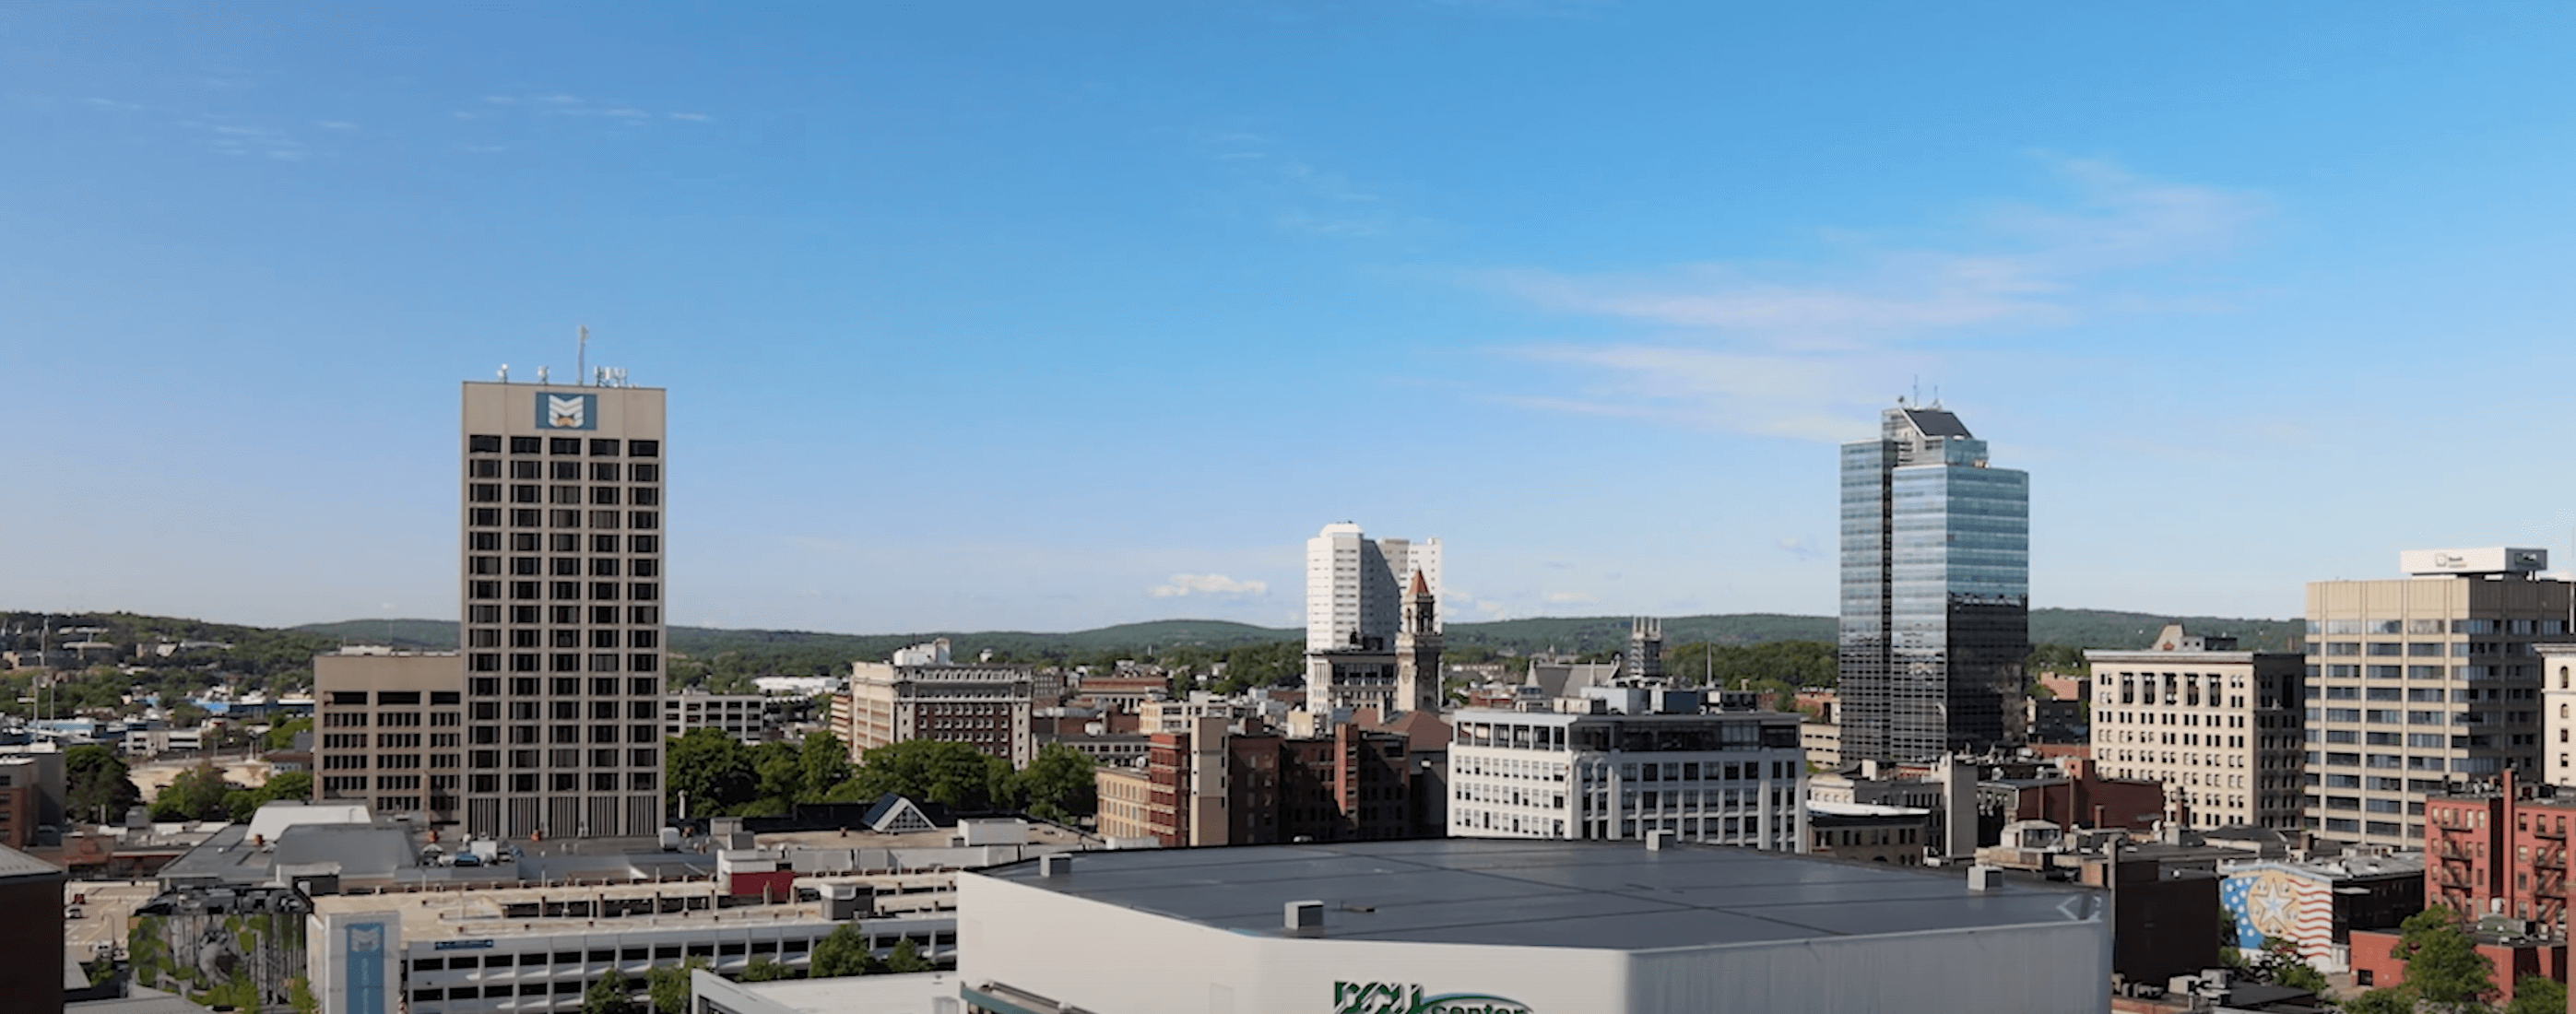 Worcester Massachusetts